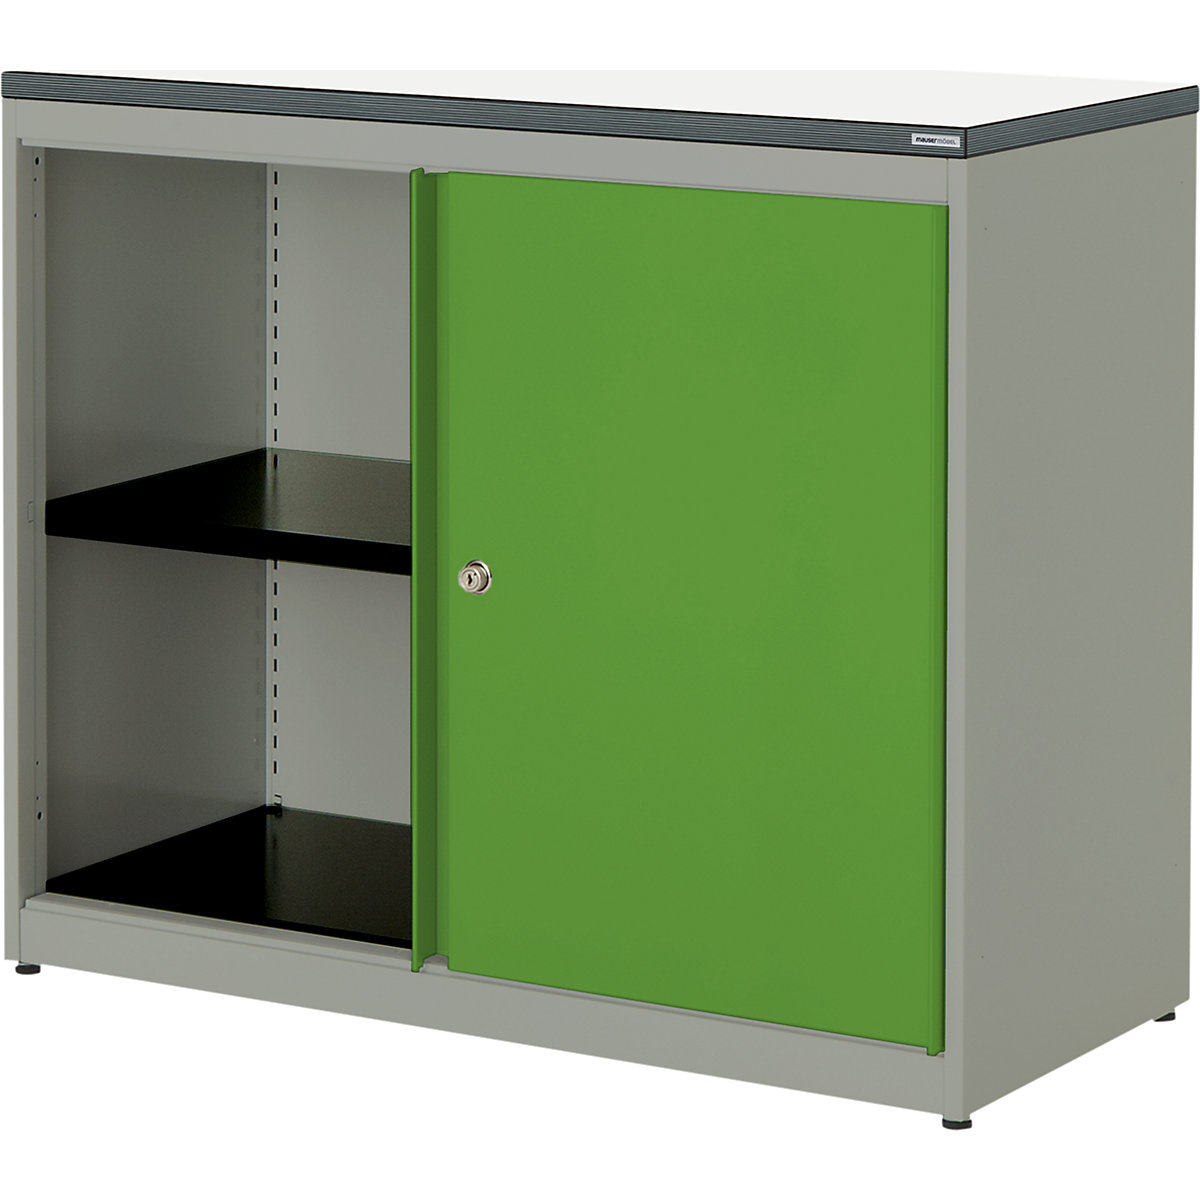 mauser – Dulap cu uși glisante, î. x lăț. x ad. 830 x 1000 x 432 mm, blat din plastic, 1 poliță, alb aluminiu / verde gălbui / alb